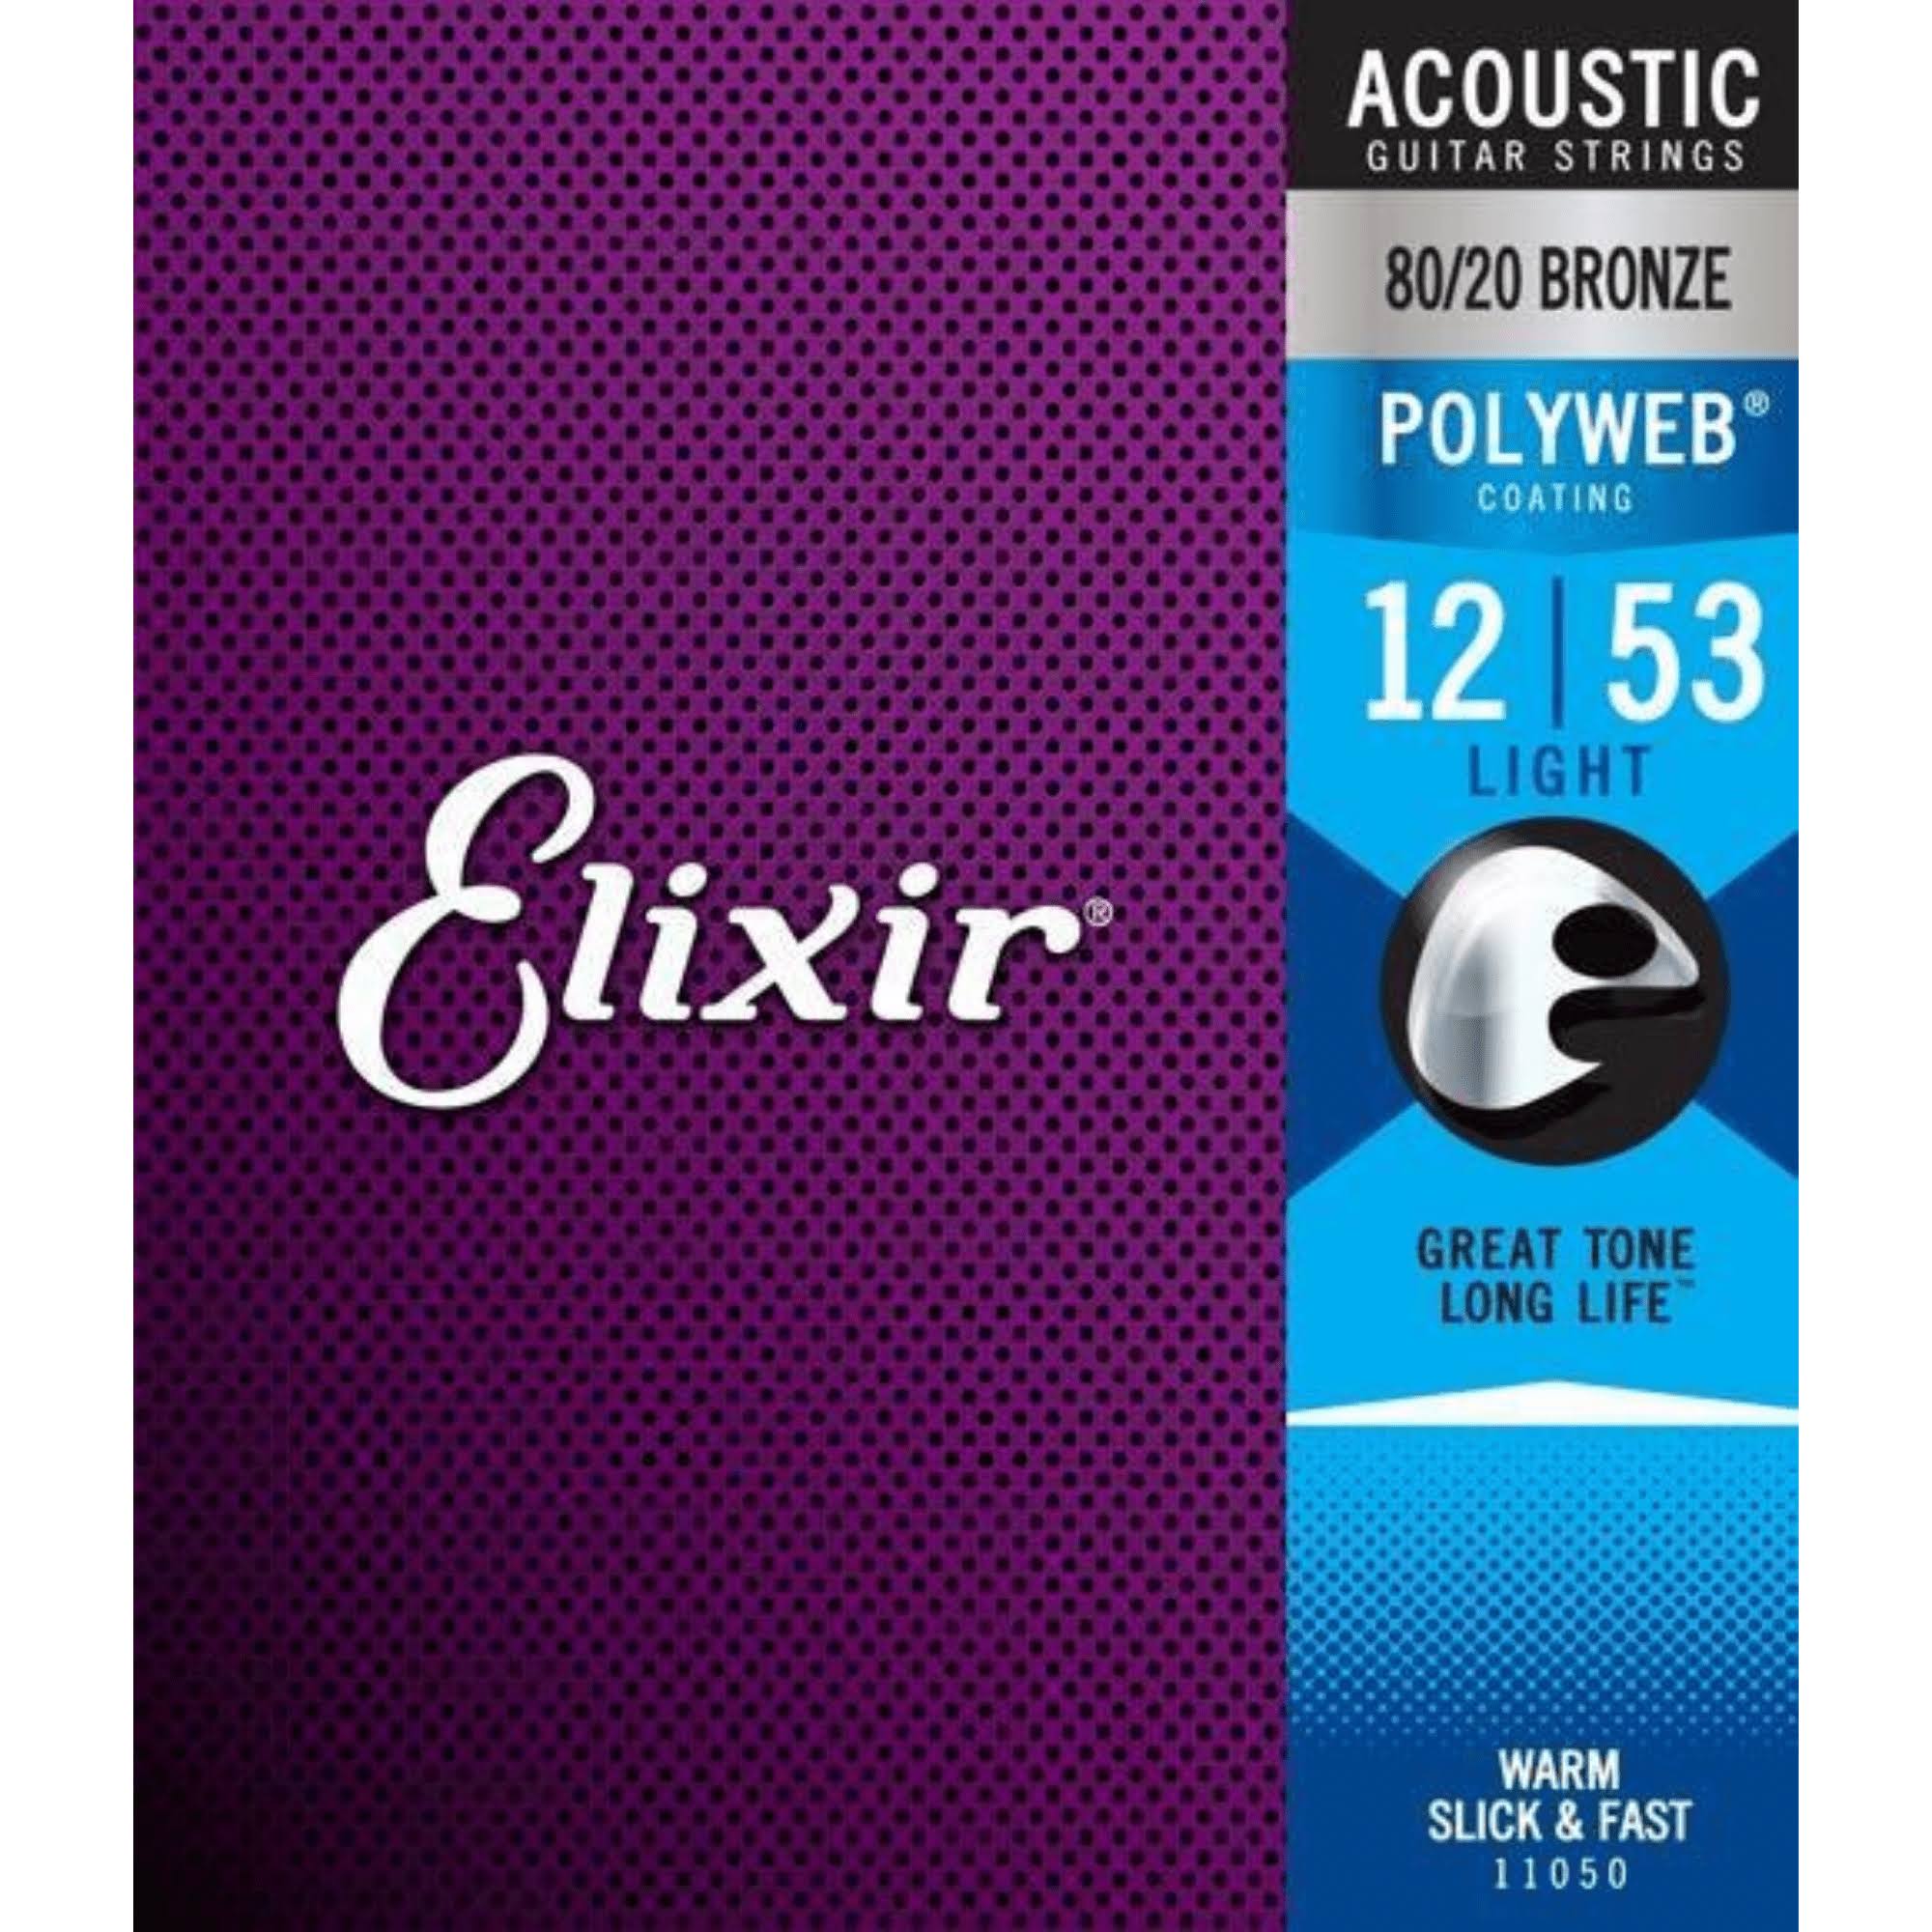 Gore Elixir Polyweb Acoustic Guitar Strings - 80/20 Bronze, Extra Light